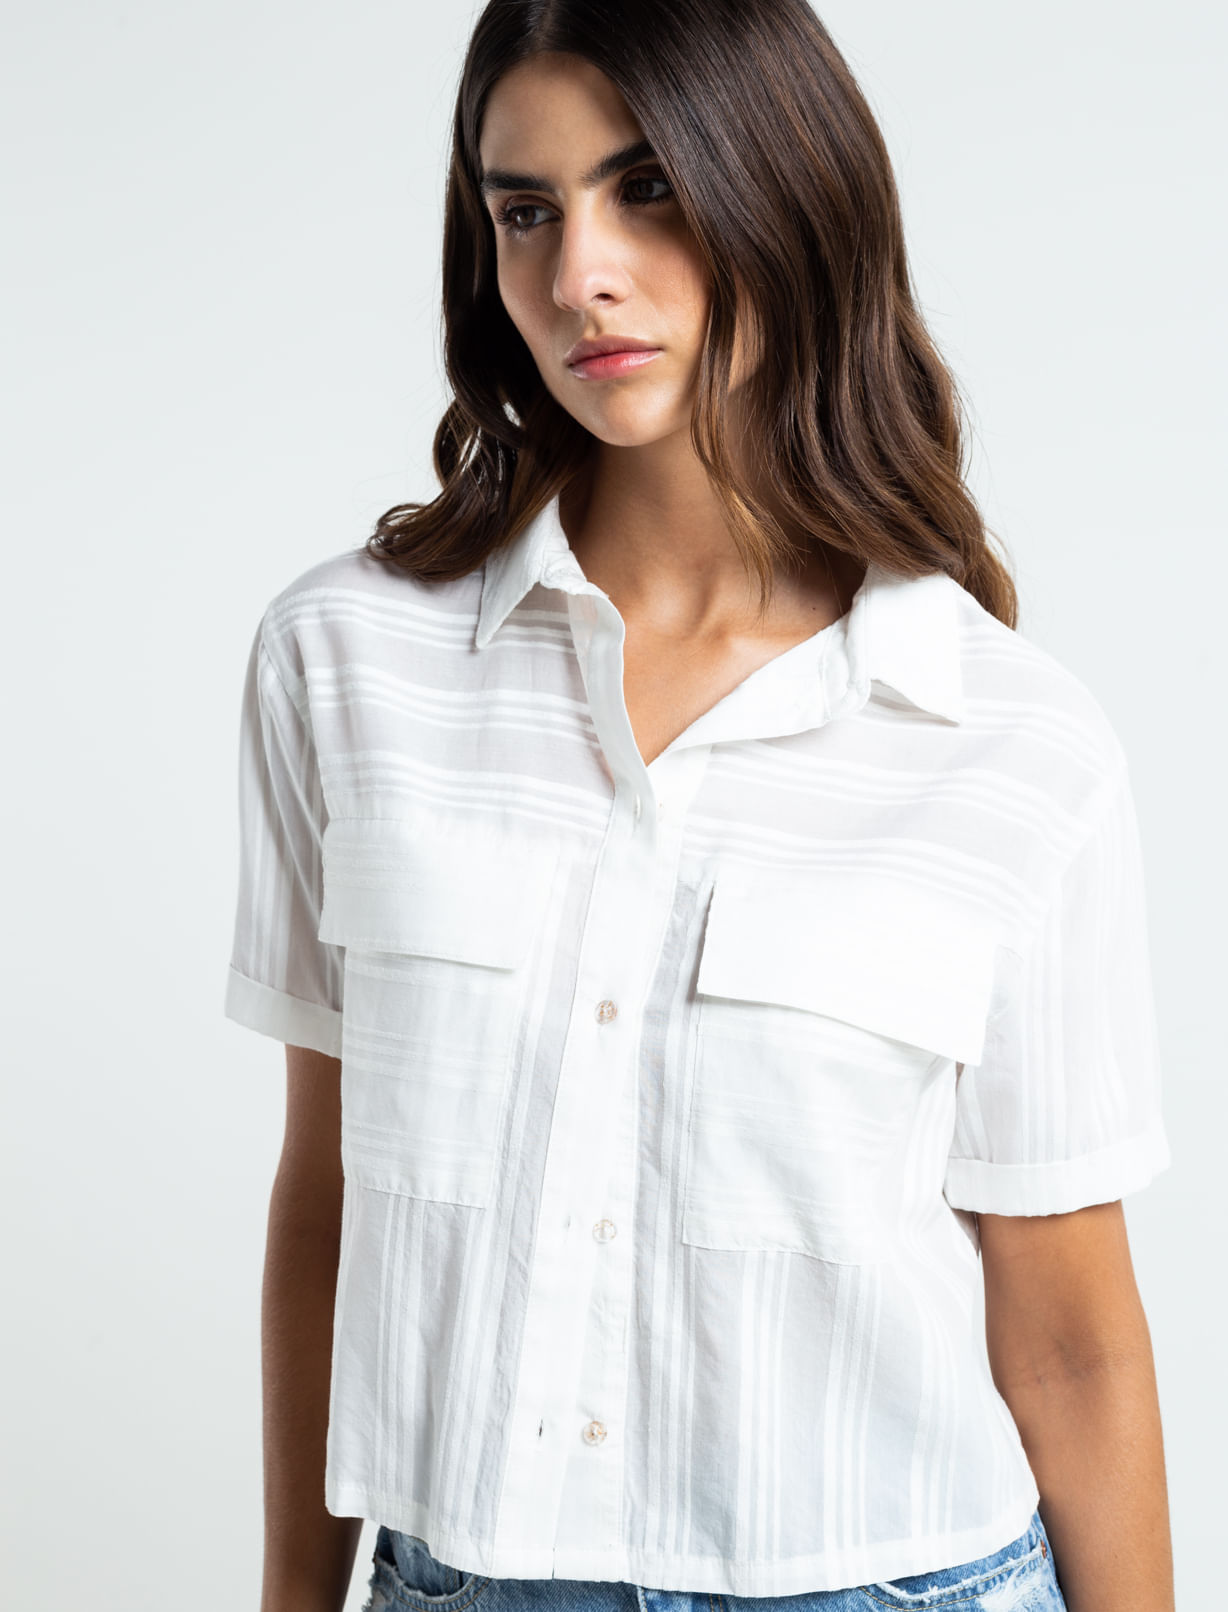 Camisas de mujer manga corta, compra online